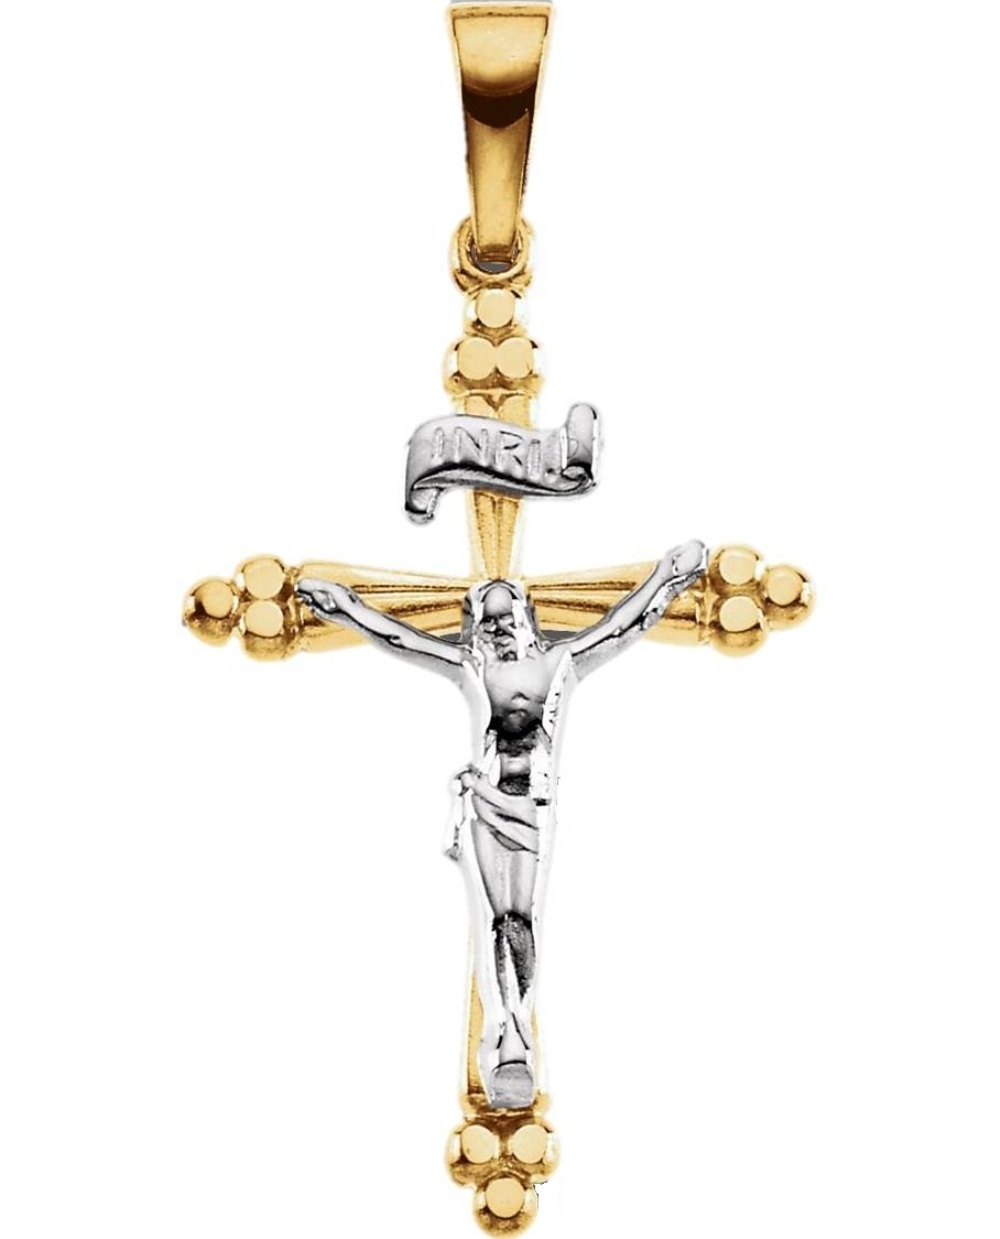 Crucifix 14k Yellow and White Gold Pendant